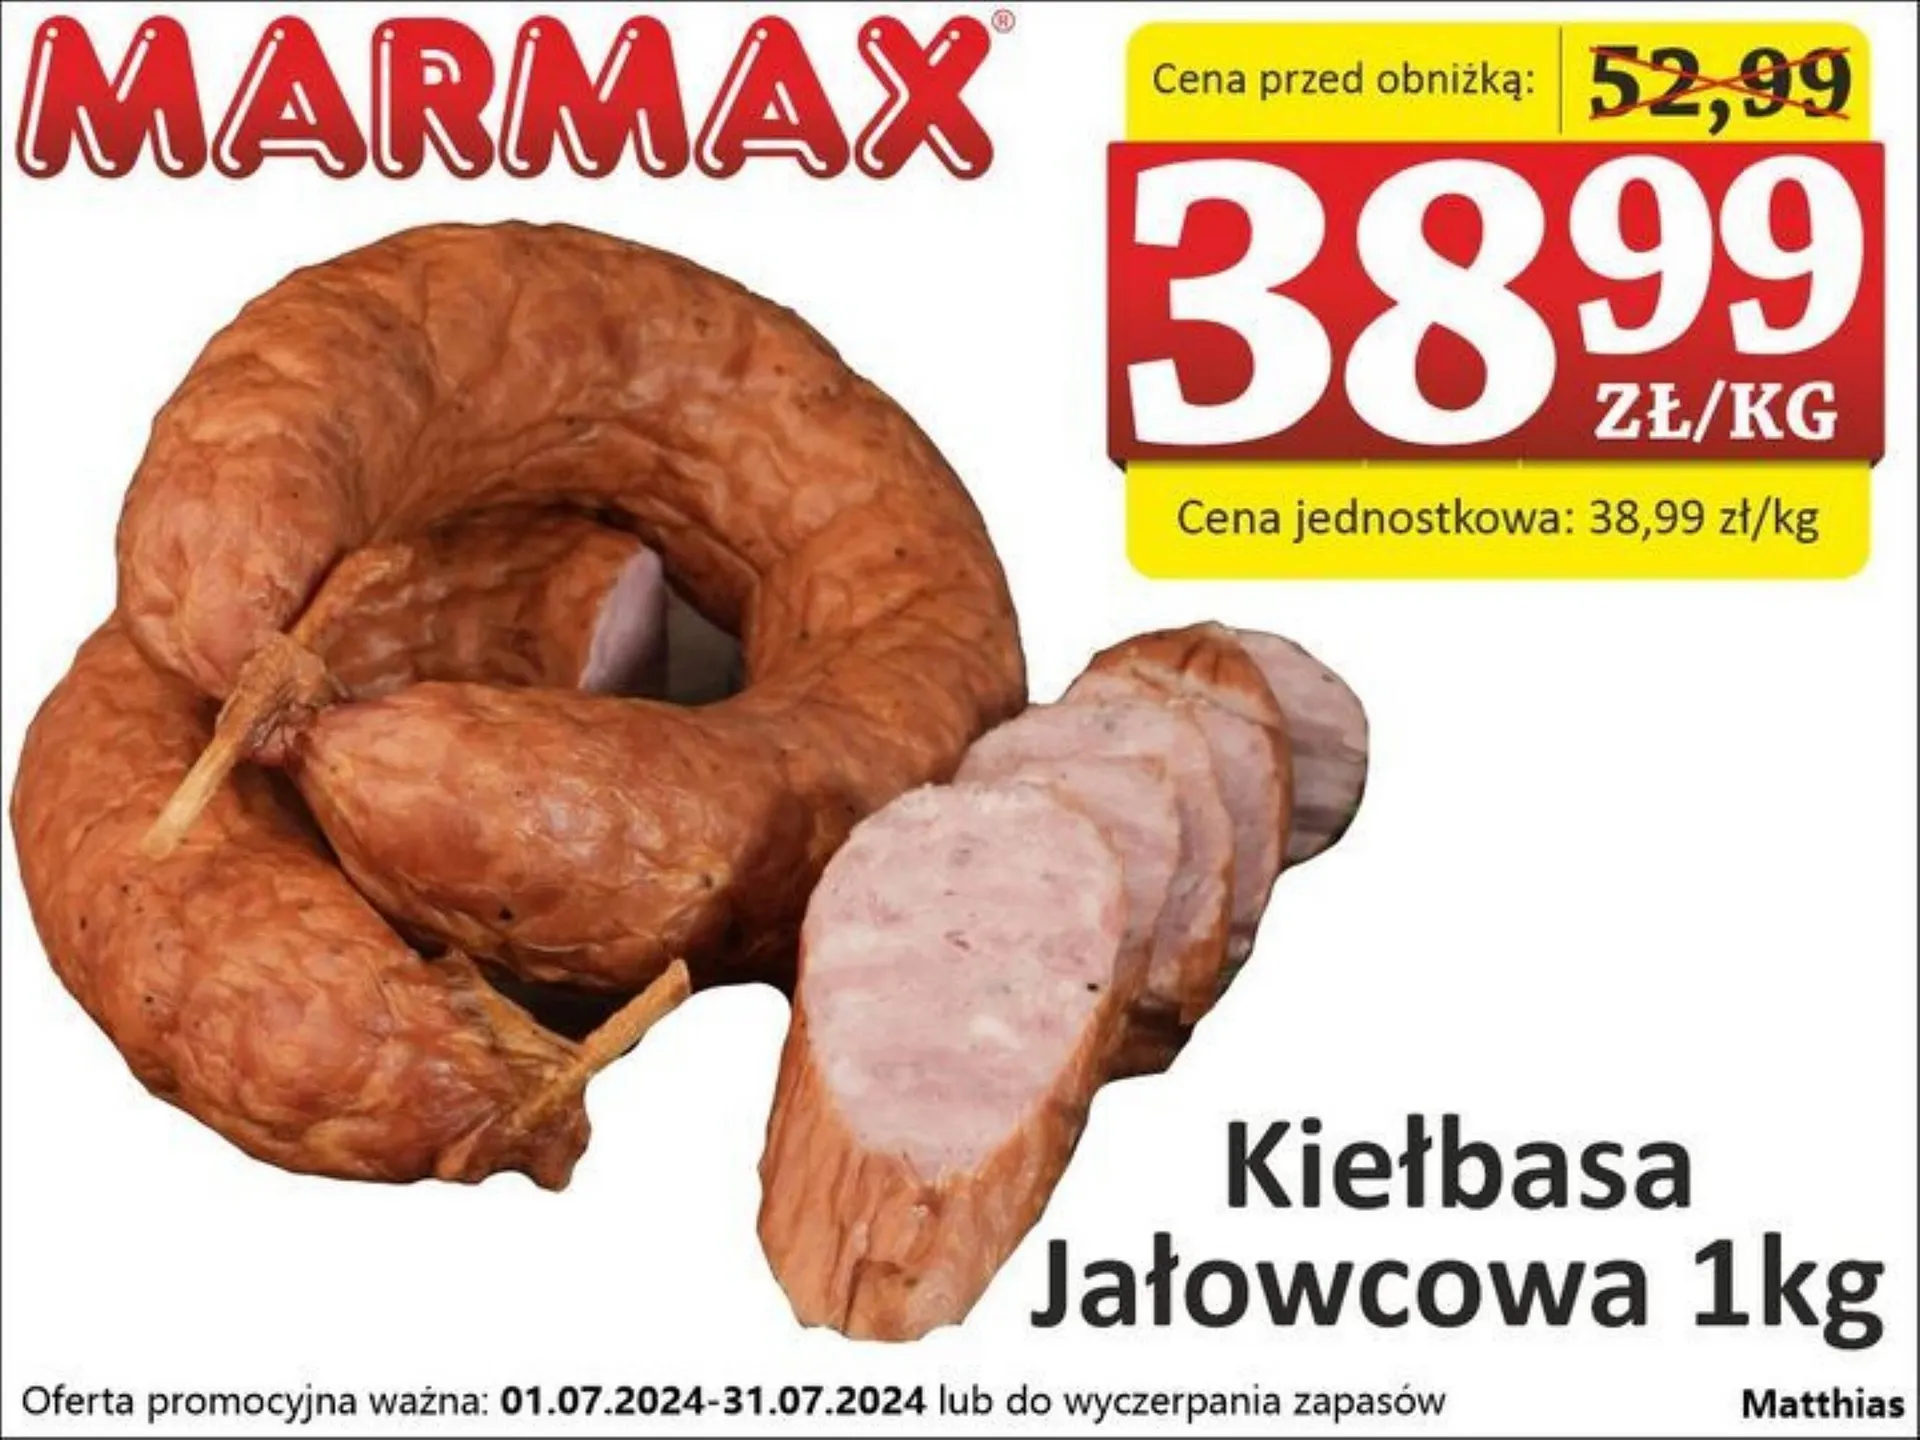 Marmax gazetka - 1